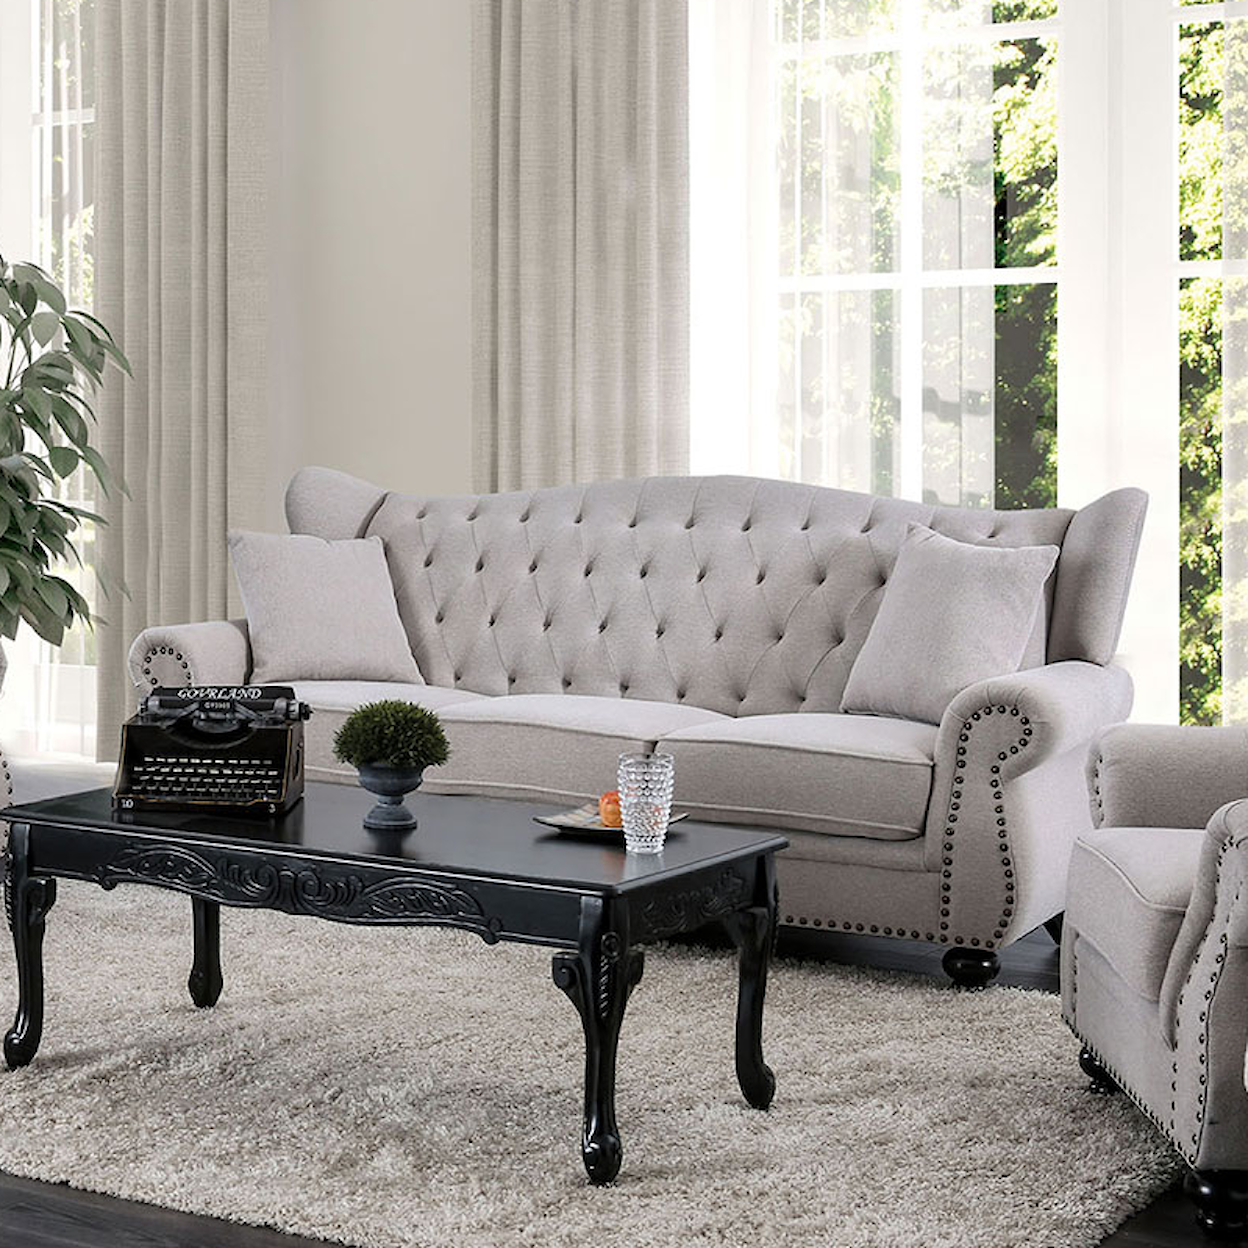 Furniture of America Ewloe Sofa